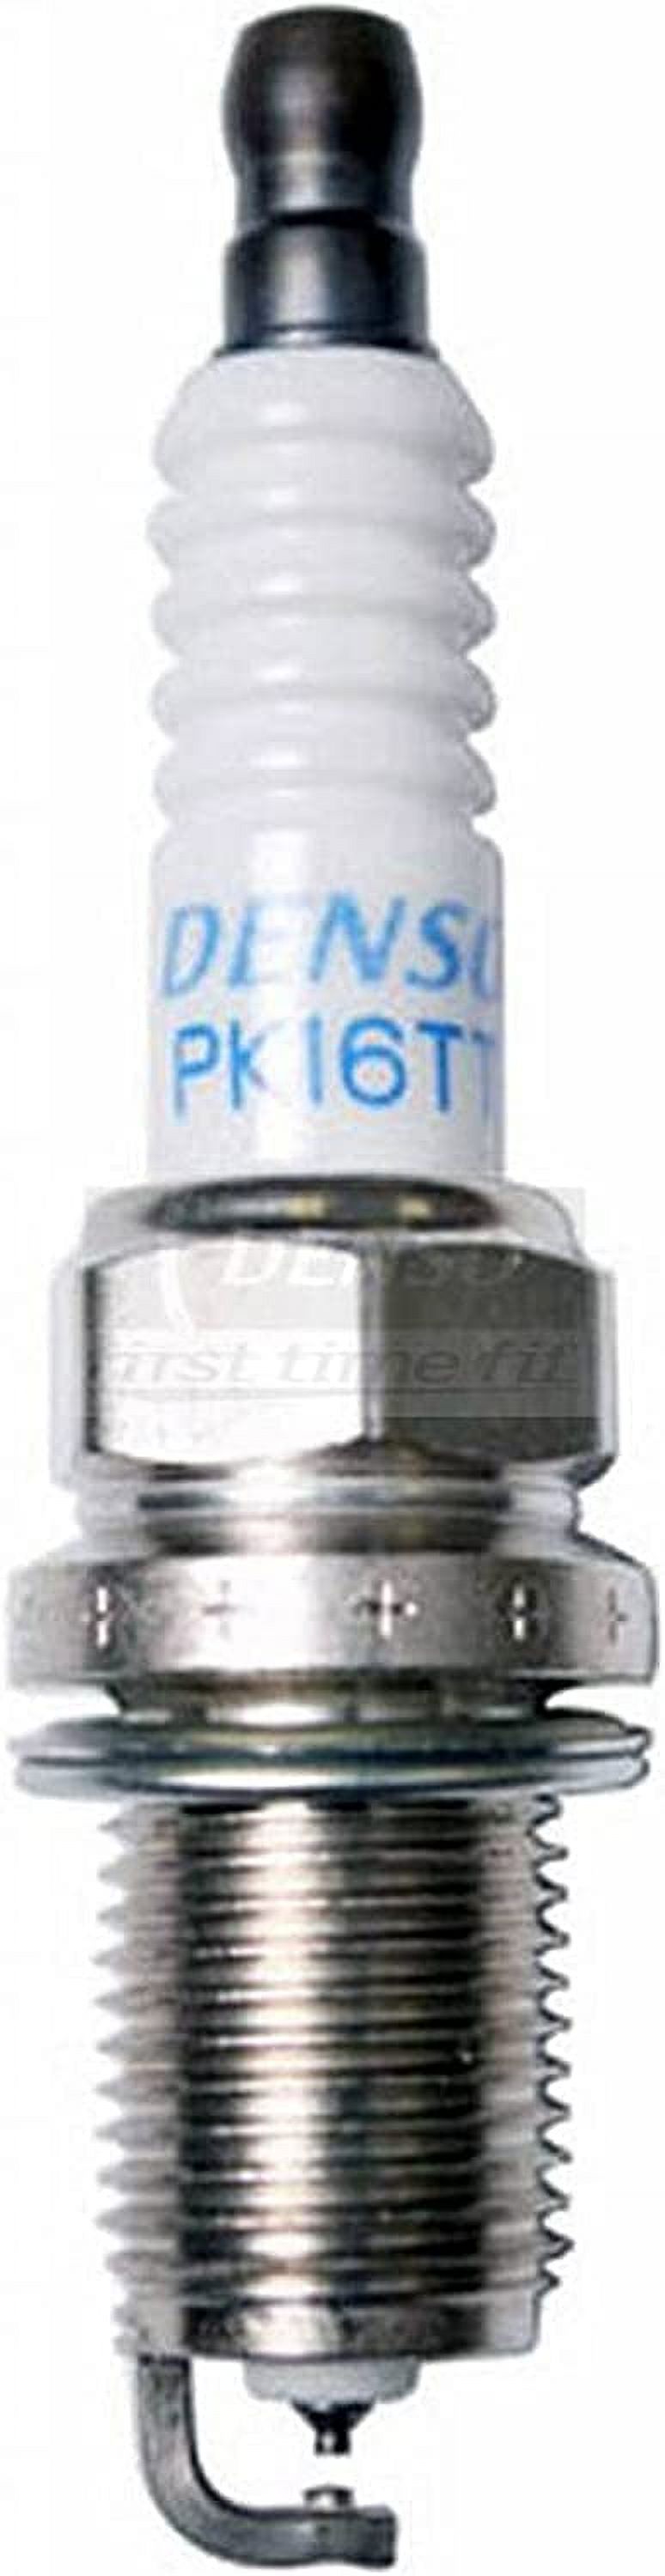 Denso Spark Plug 4503 Fits select: 2002-2007 DODGE RAM 1500, 1993-2008 TOYOTA COROLLA - image 1 of 2